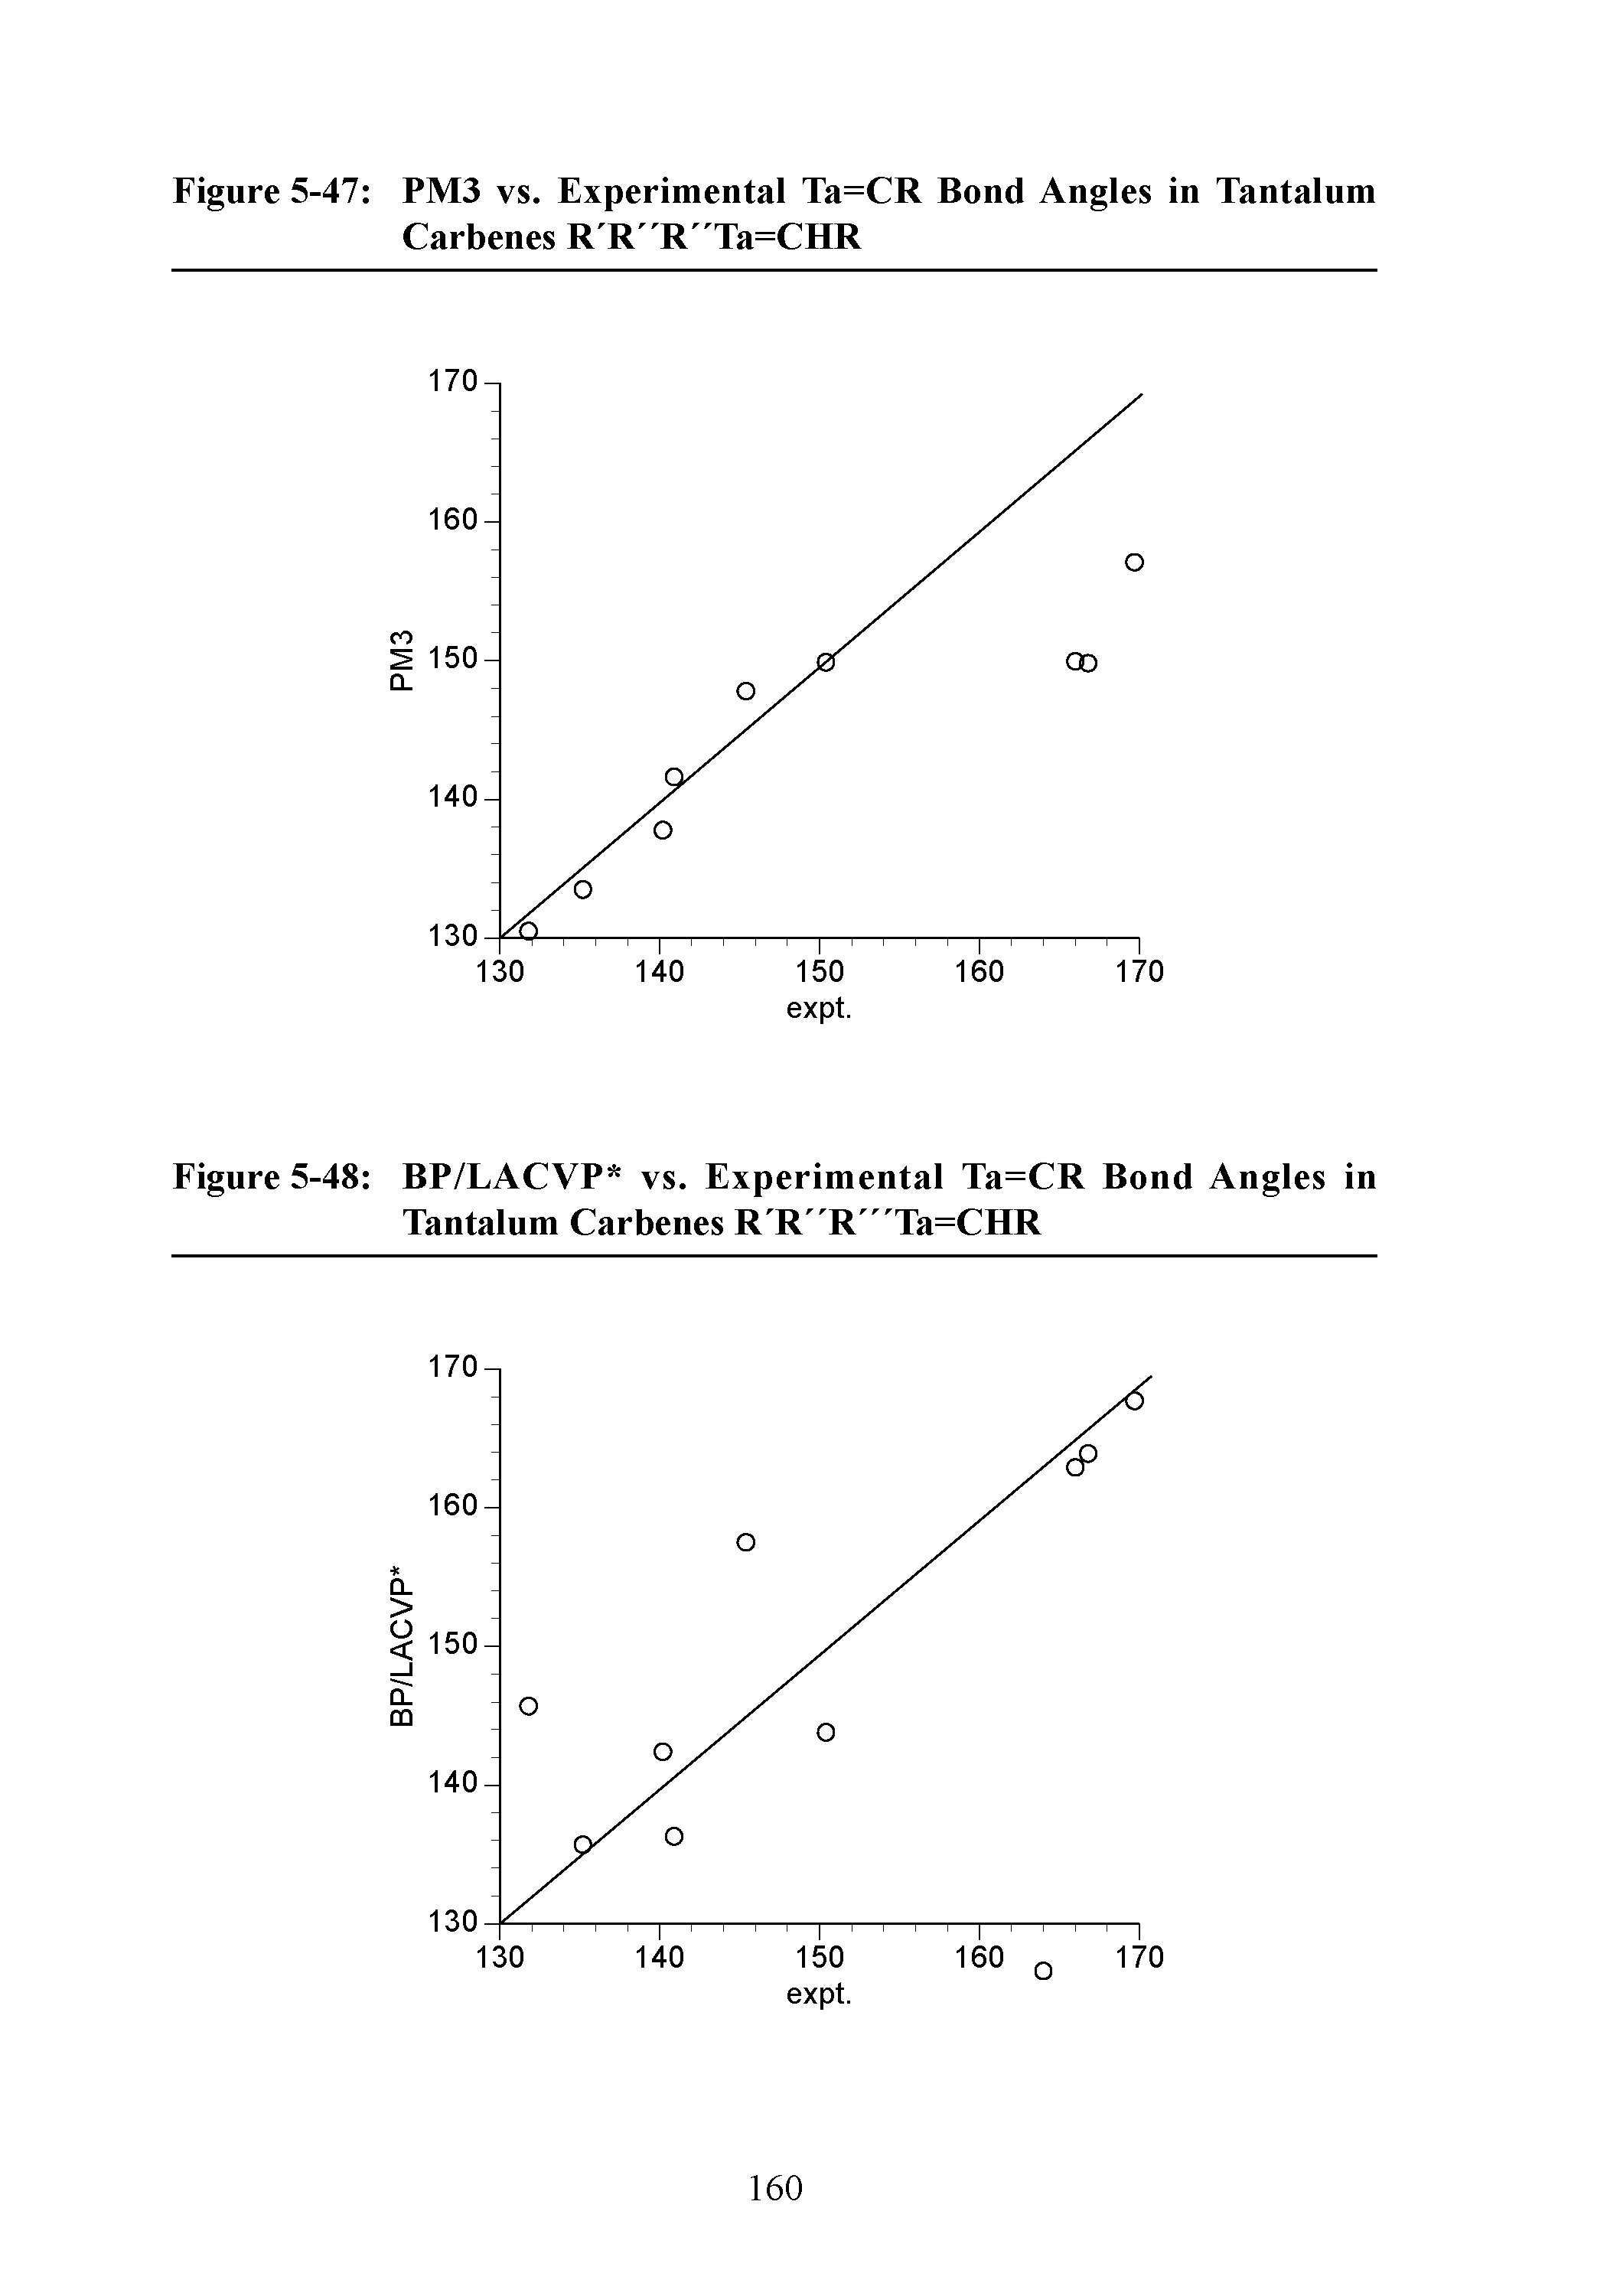 Figure 5-48 BP/LACVP vs. Experimental Ta=CR Bond Angles in Tantalum Carbenes R R R Ta=CHR...